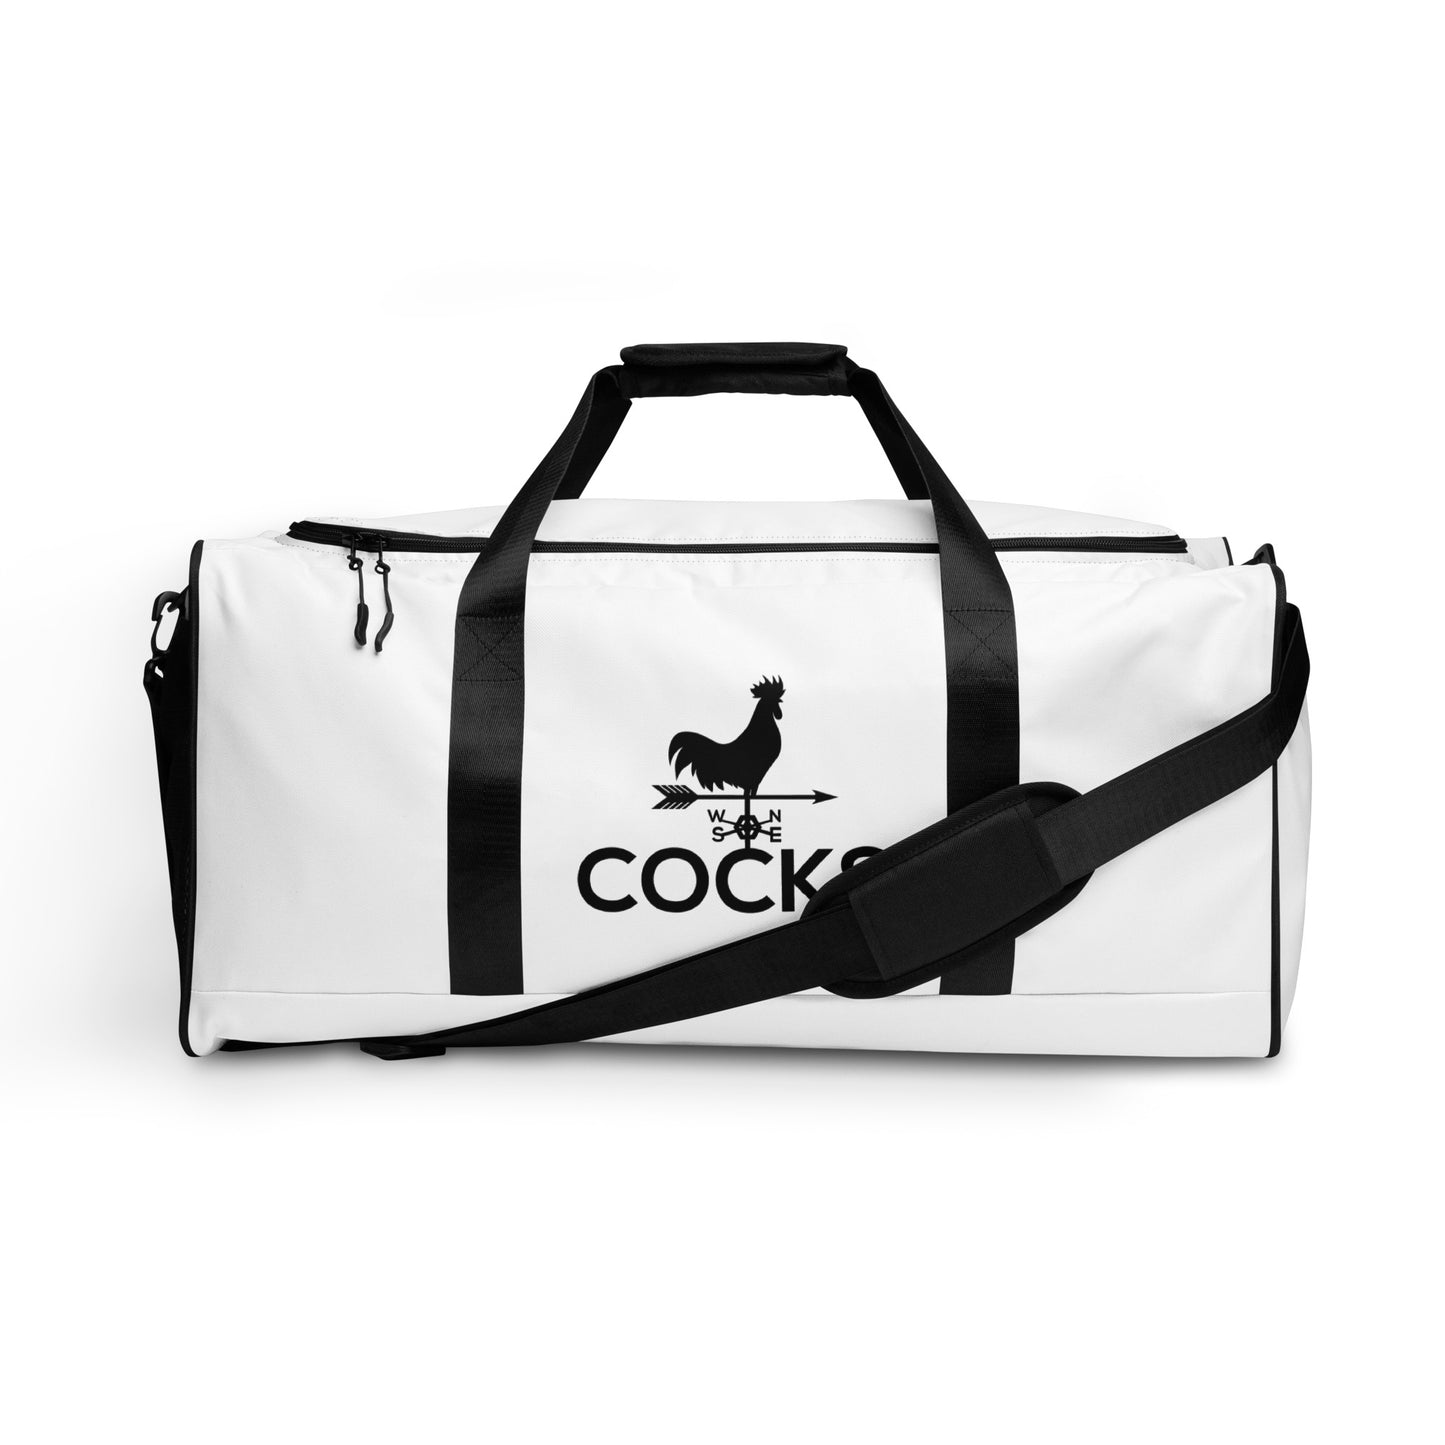 Cocks Duffle Bag